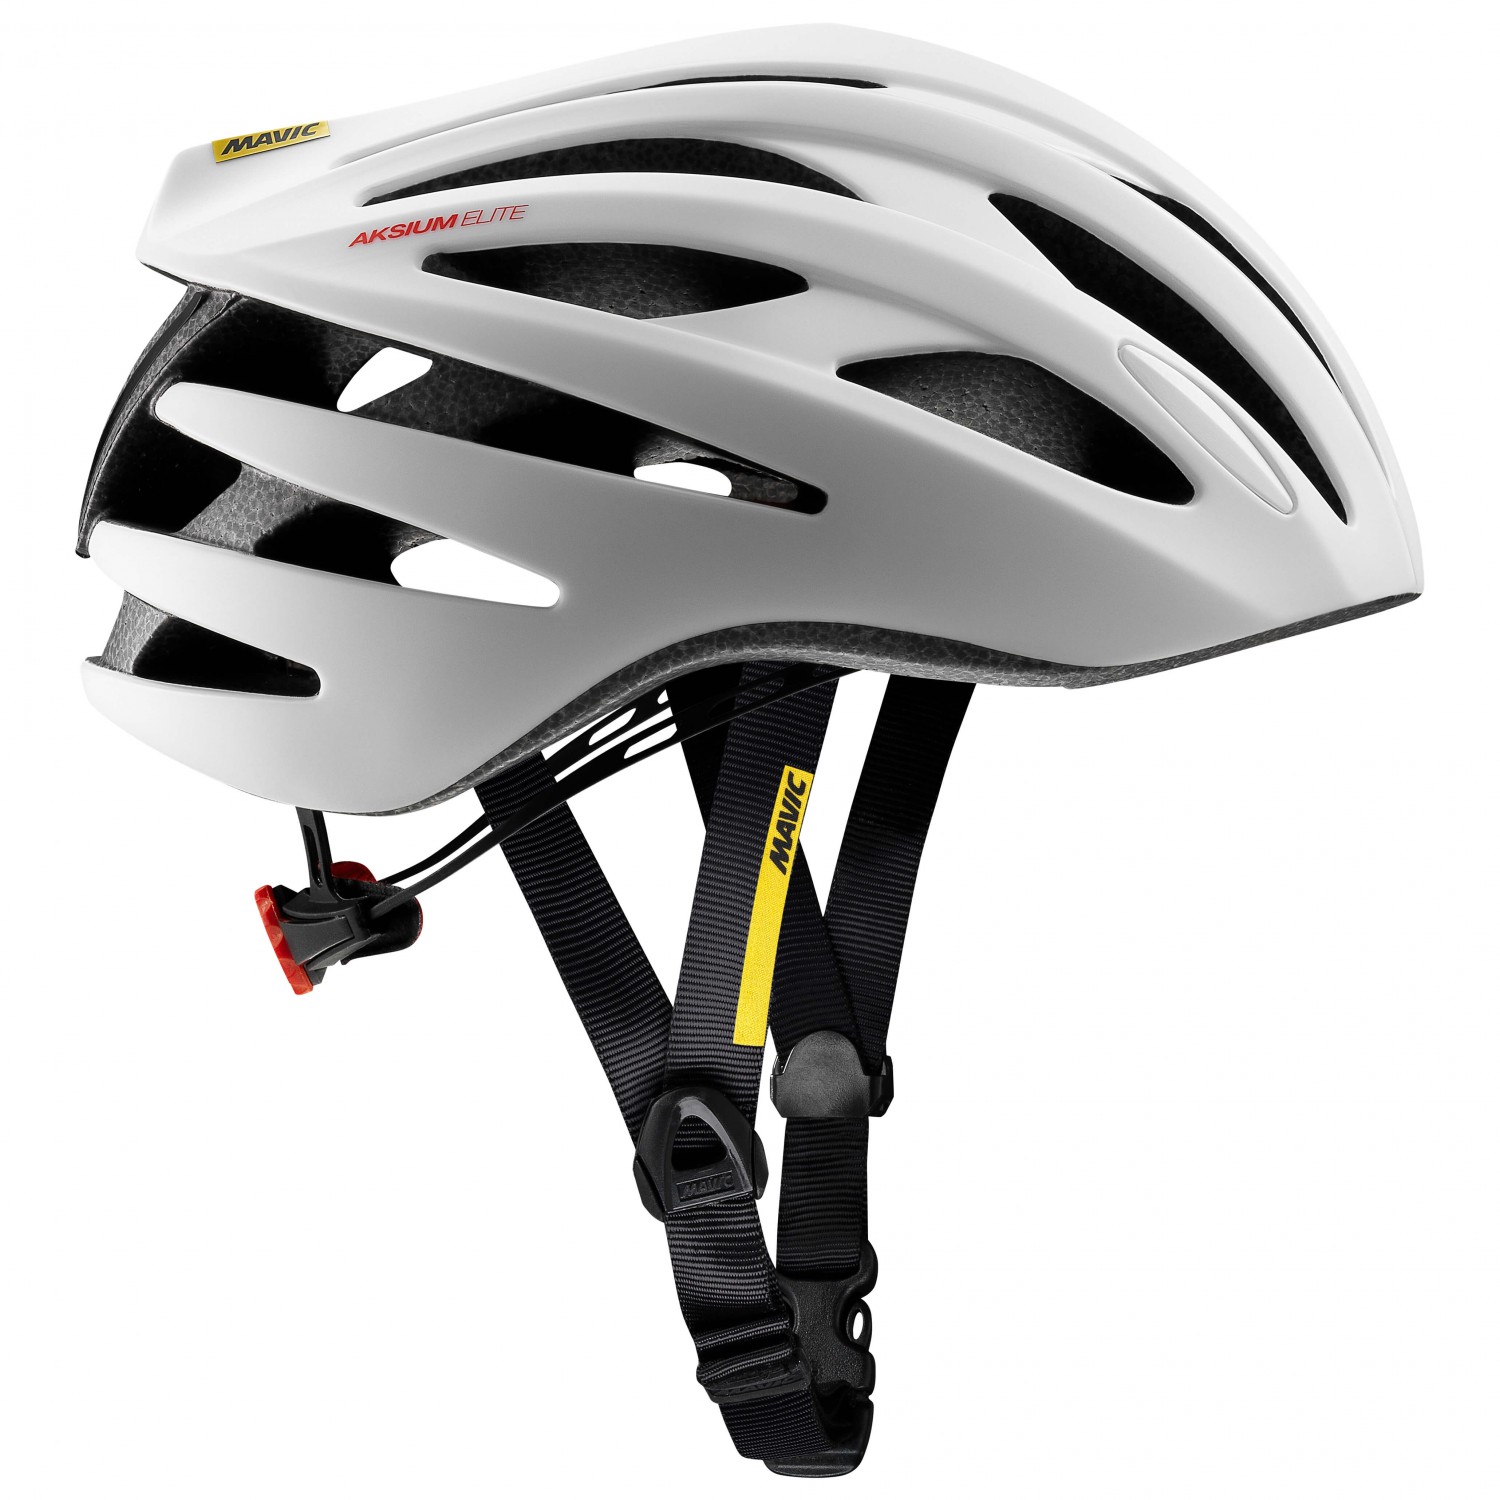 Велосипедный шлем Mavic Aksium Elite, цвет White/Black цена и фото